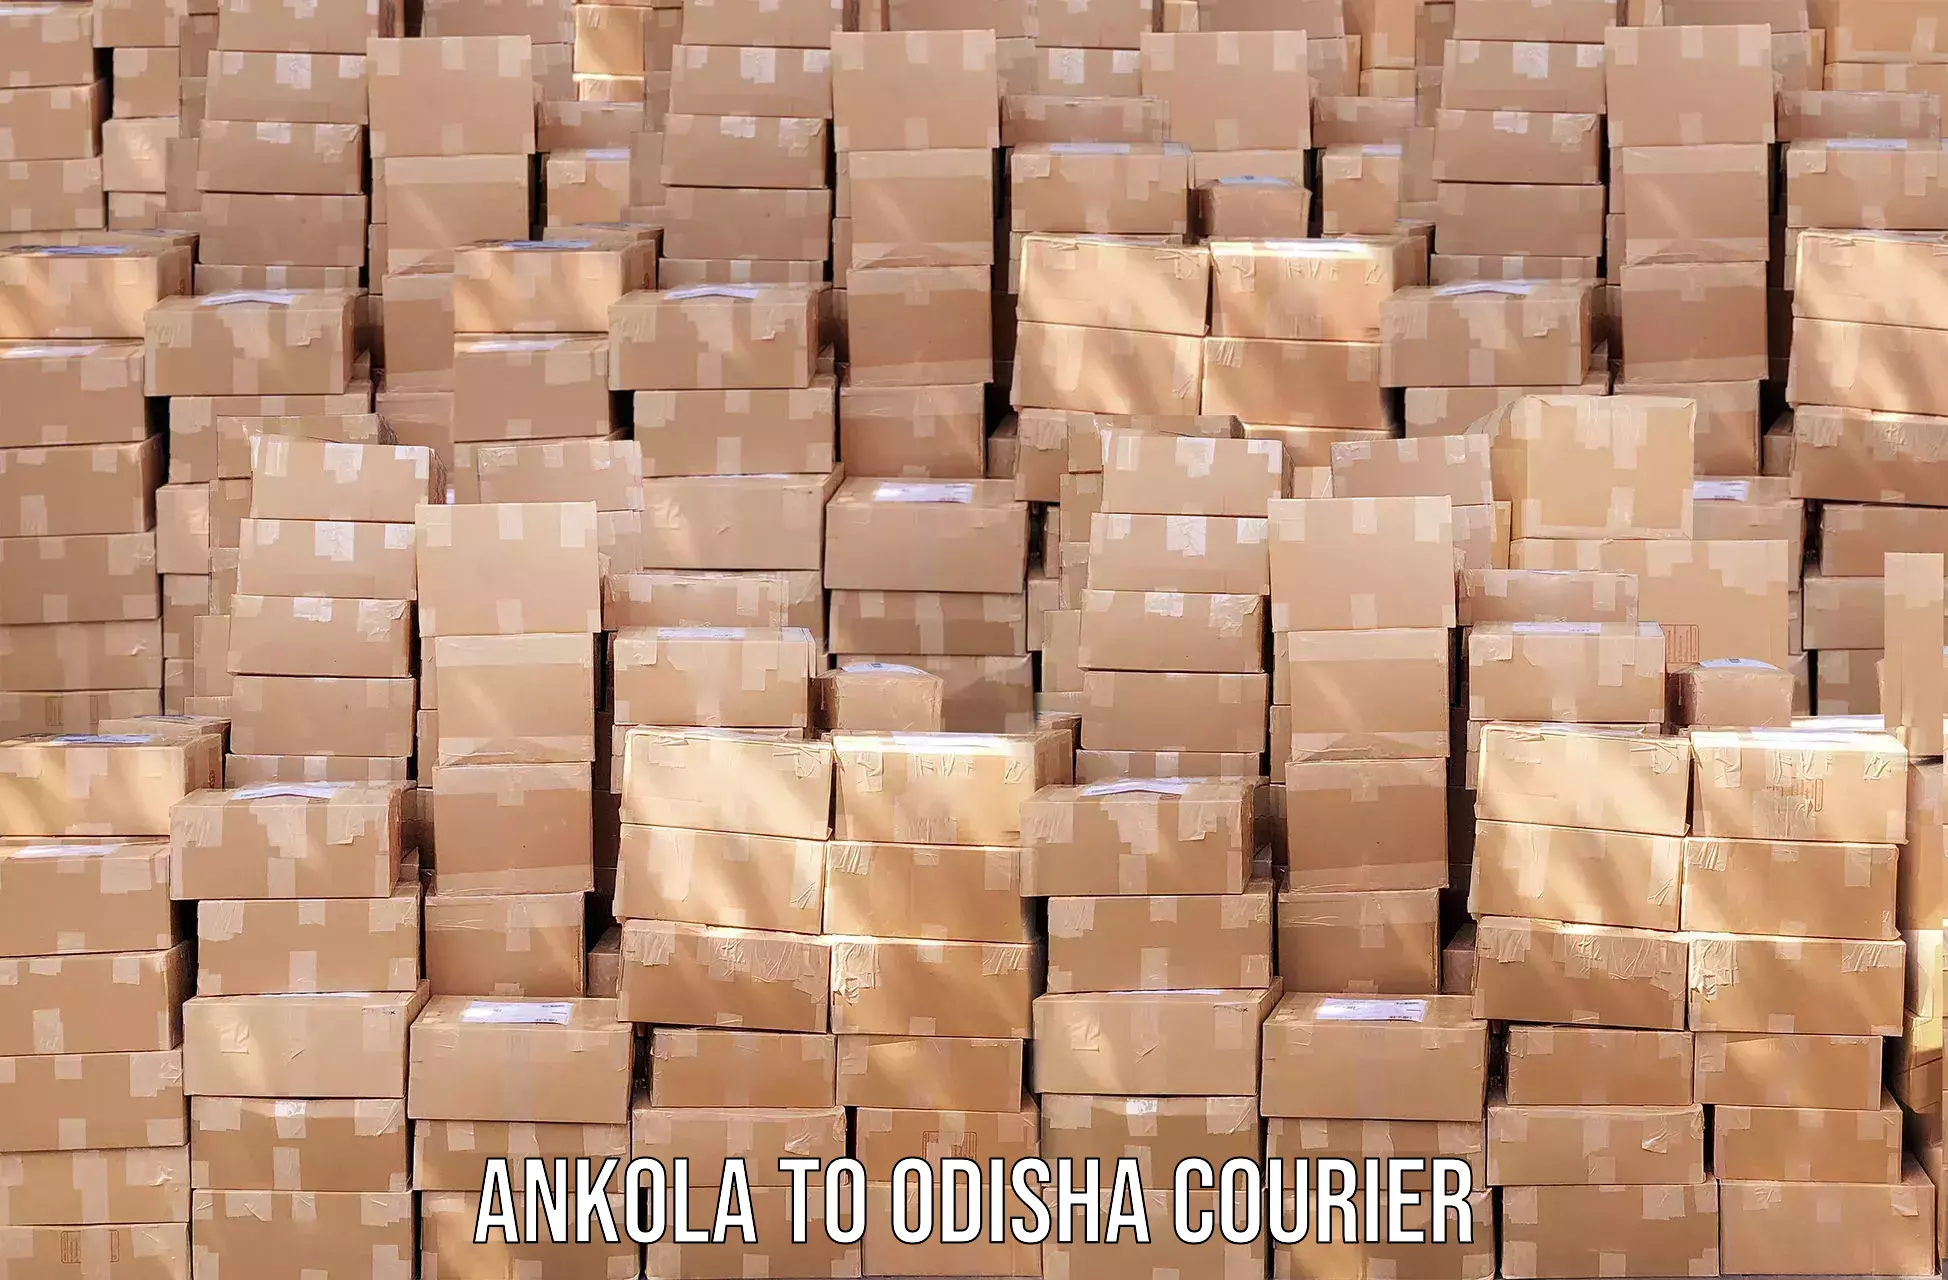 Package delivery network Ankola to Balikuda